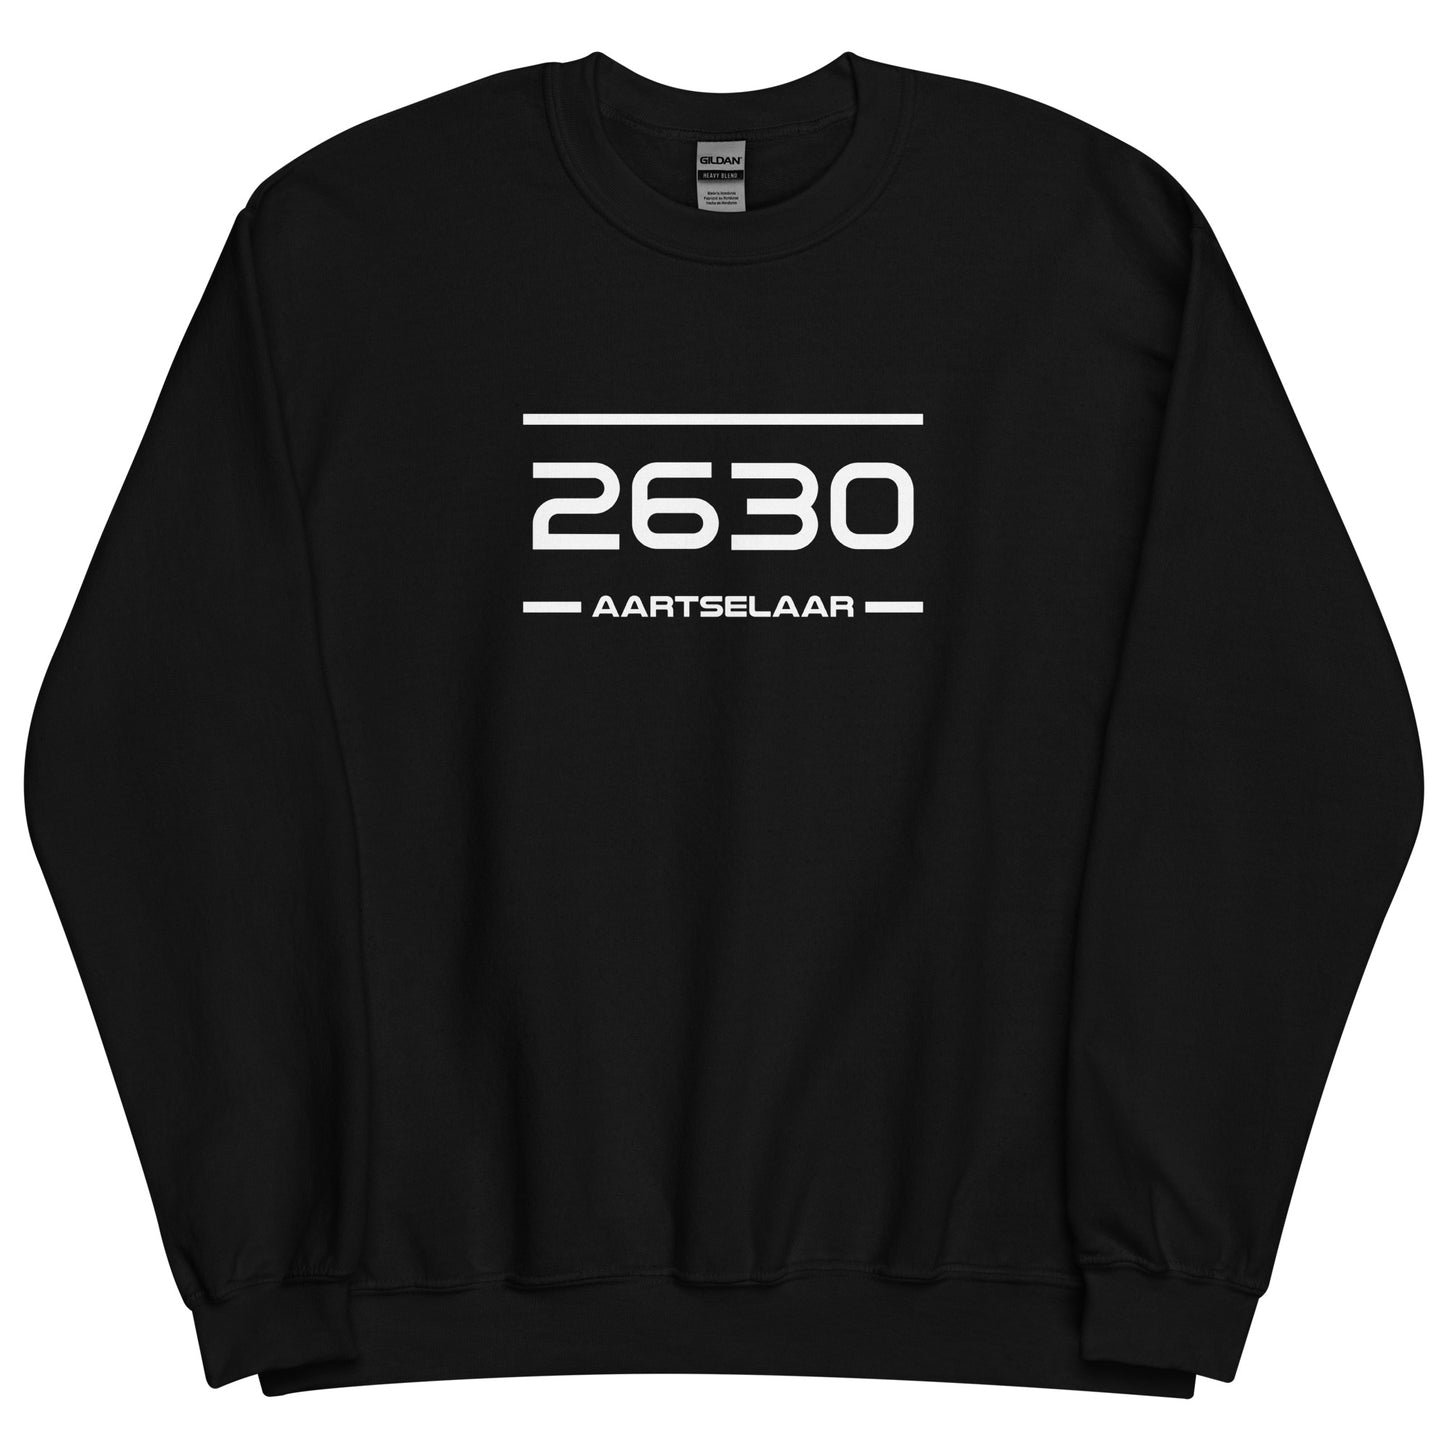 Sweater - 2630 - Aartselaar (M/V)